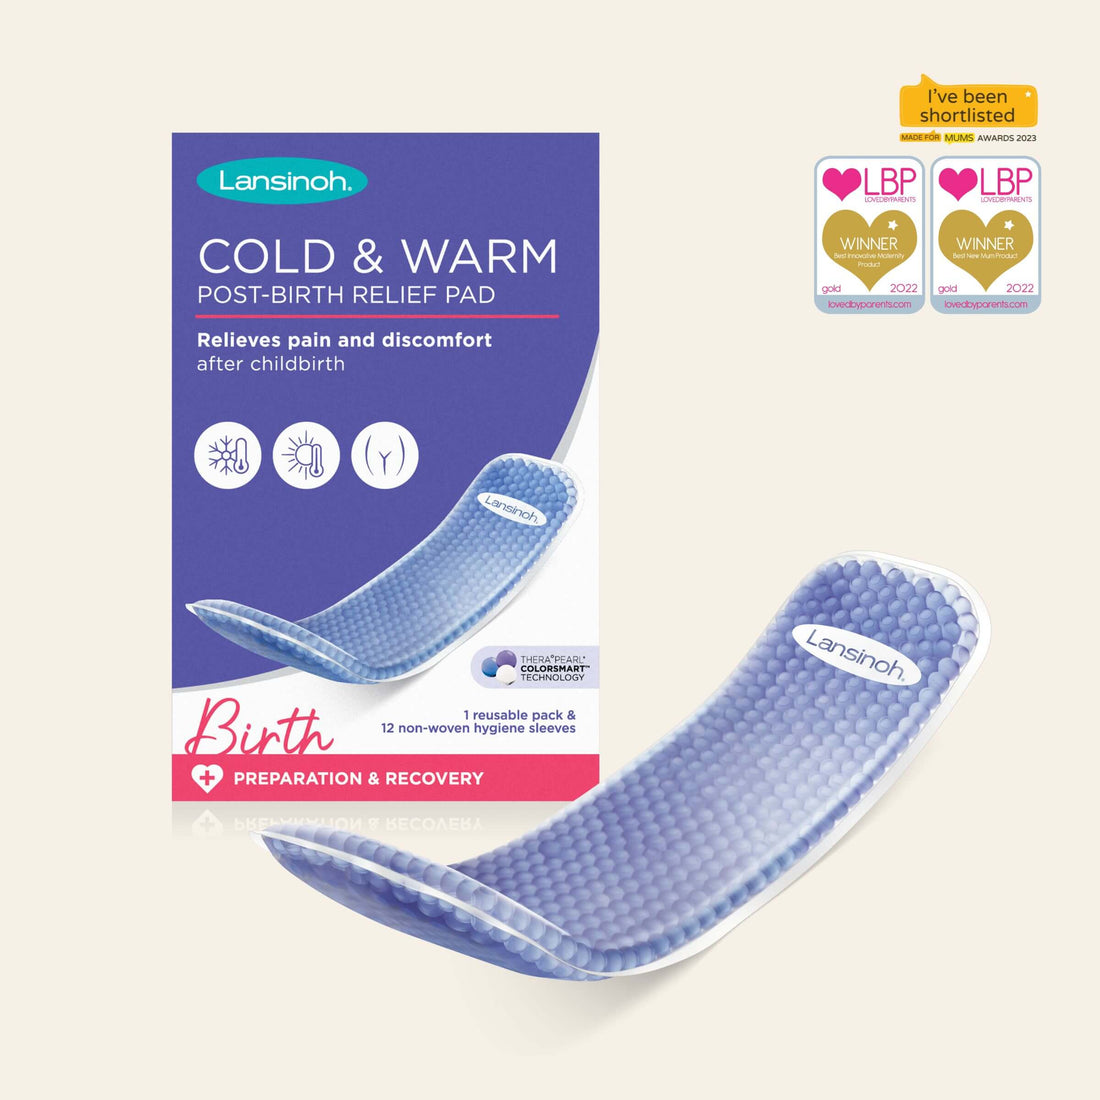 Cold & Warm Post-Birth Relief Pad